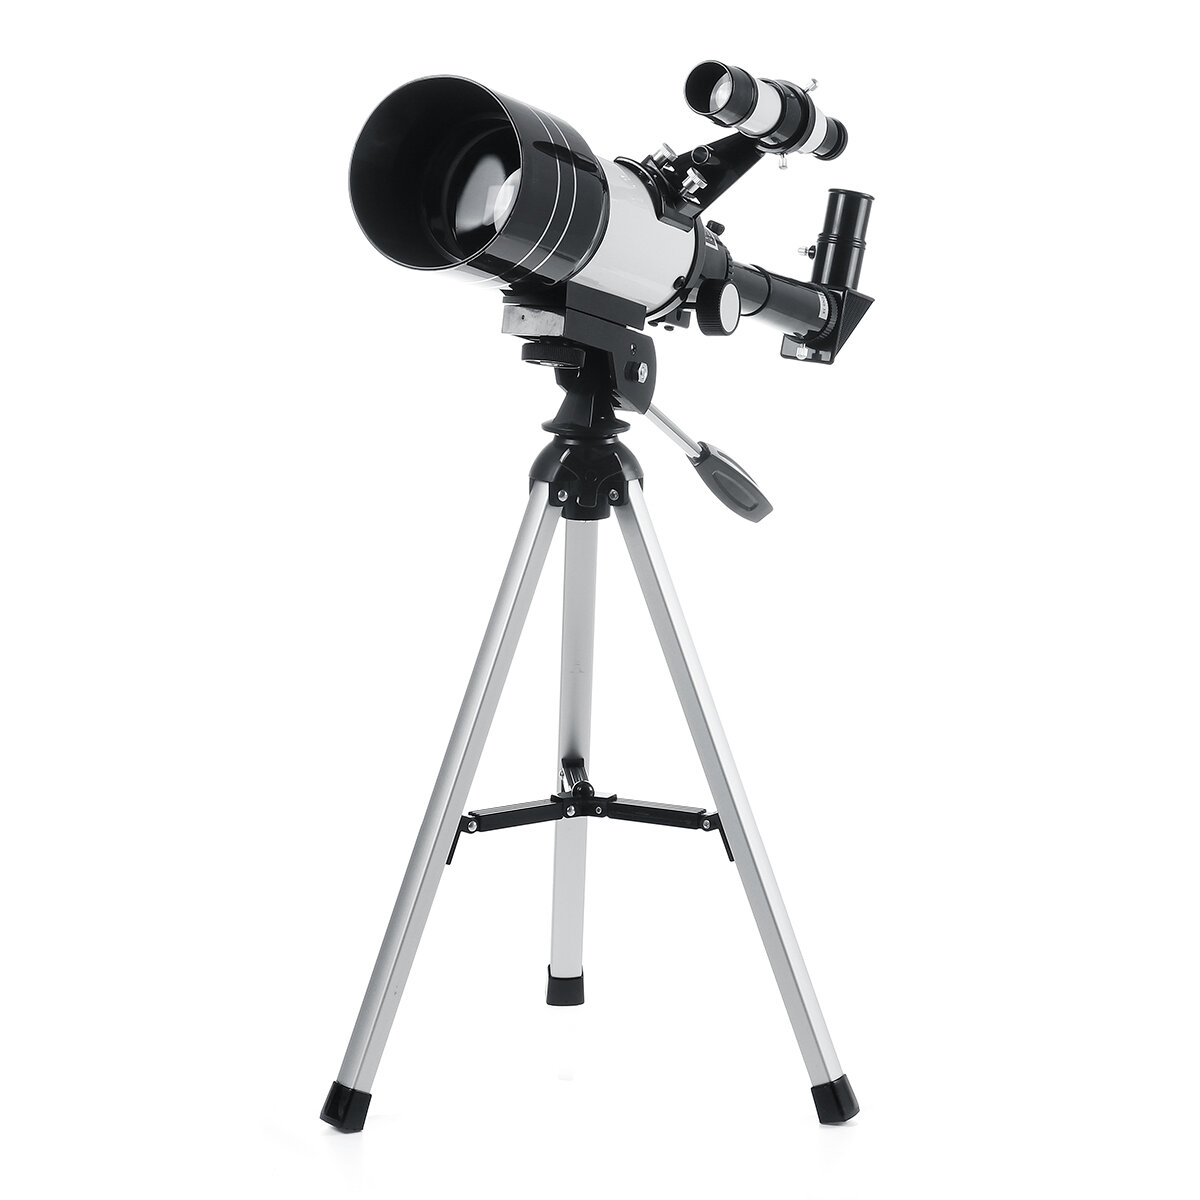 150x70mmのプロフェッショナルな天体望遠鏡、高精細で宇宙と月を観察する。屋外や家庭での使用に最適です。